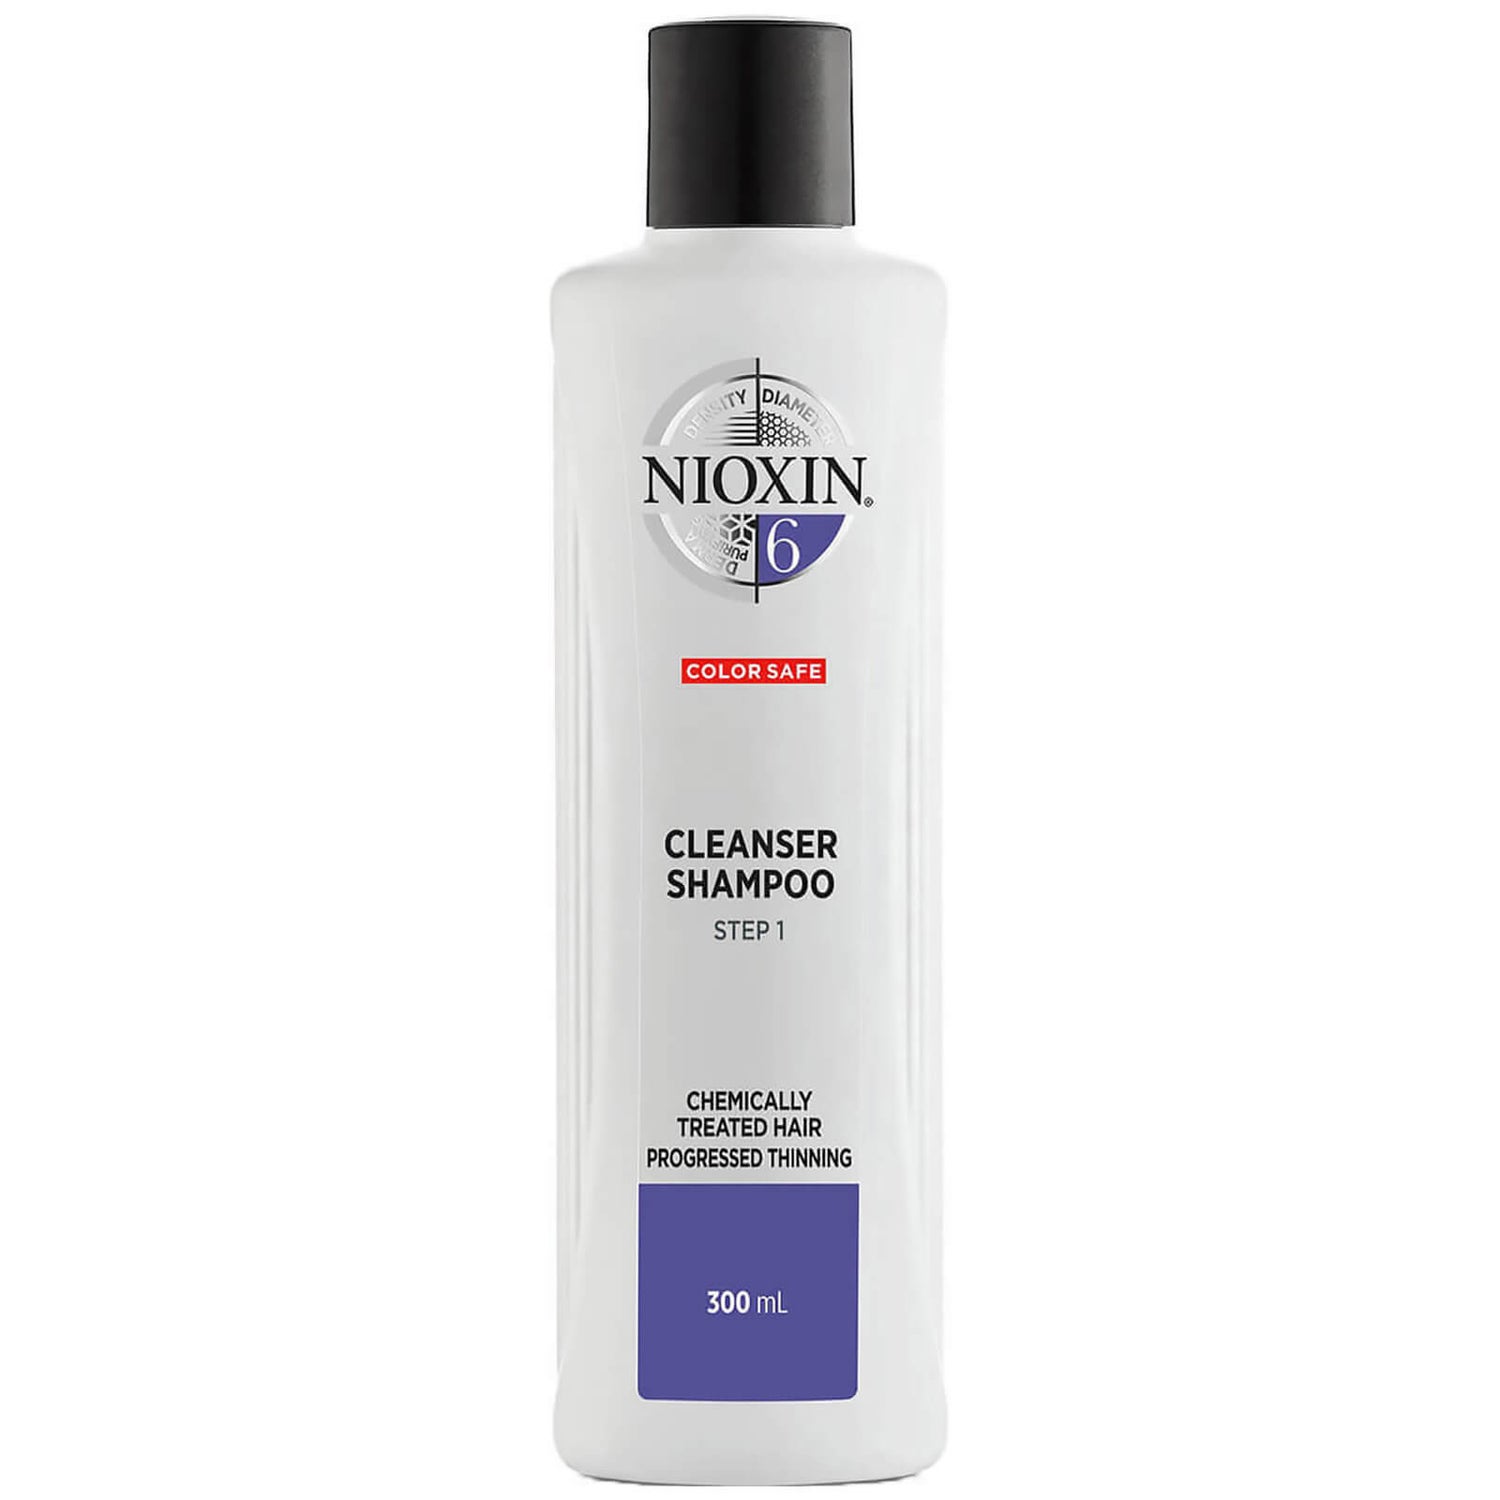 NIOXIN 3-Part System 6 Cleanser Shampoo for Chemically Treated Hair with Progressed Thinning szampon do włosów 300 ml